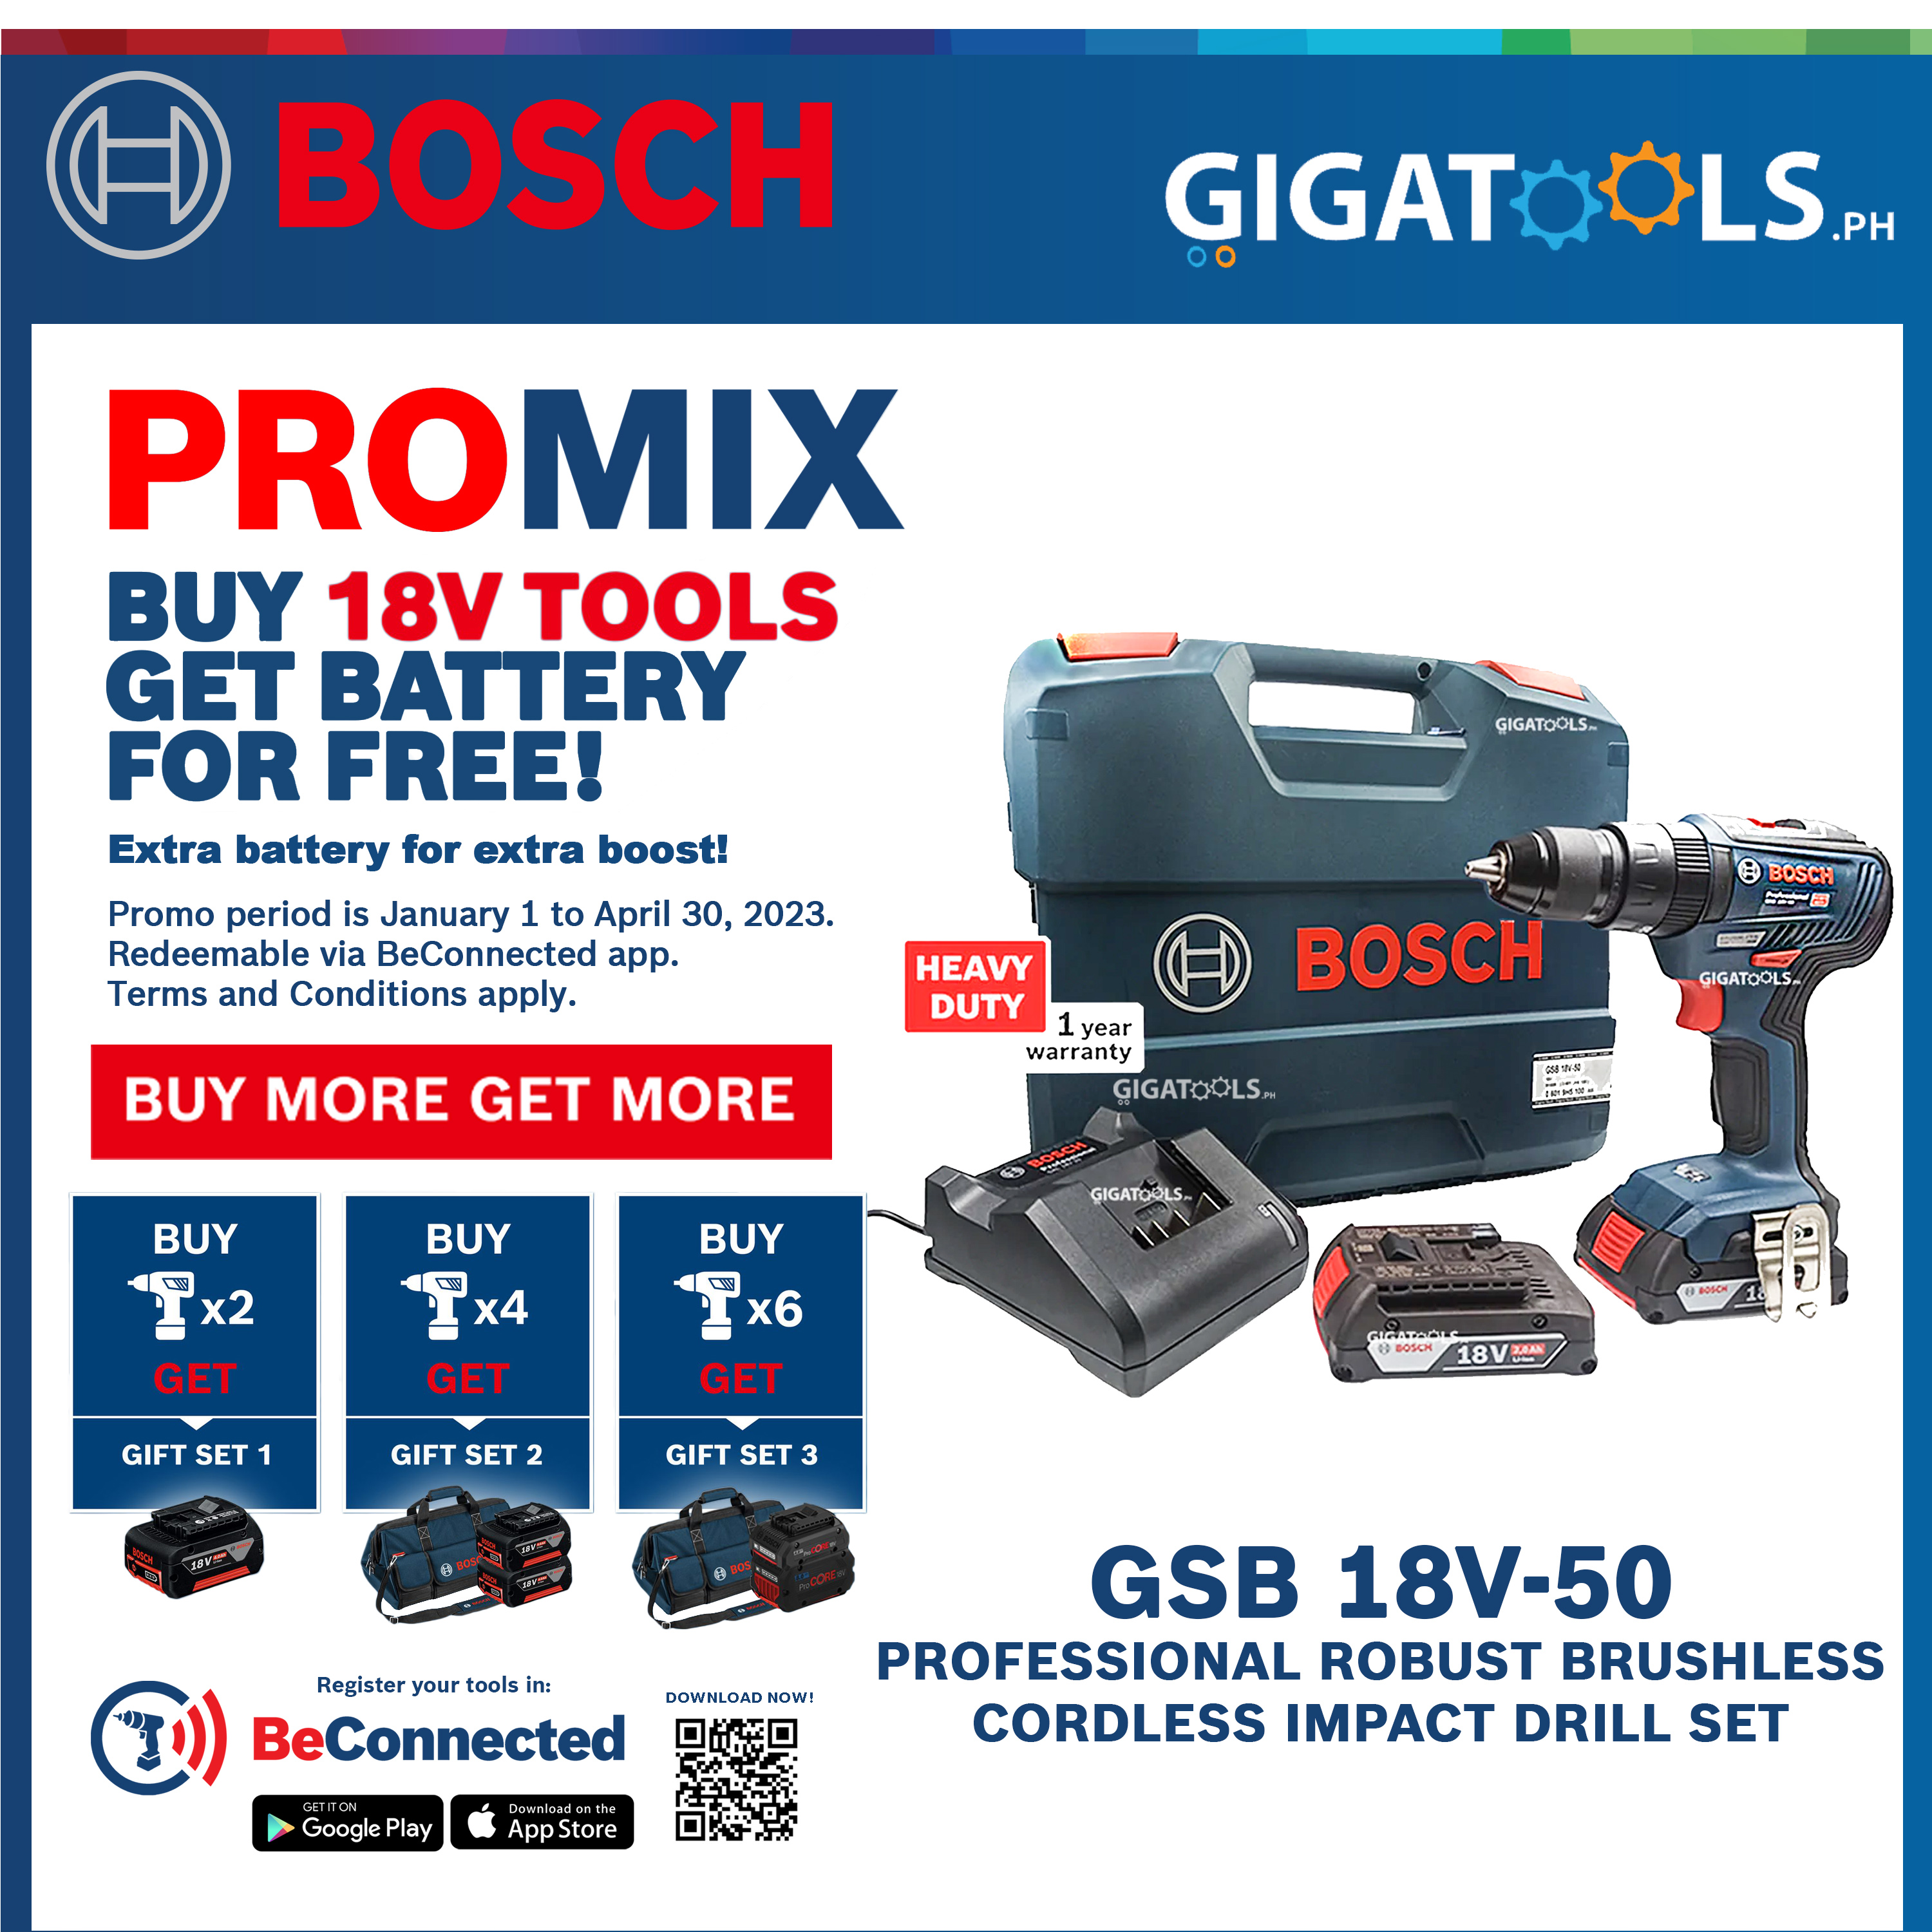 Bosch 18V-50 Brushless Cordless Impact Drill Set with Bonus Bit